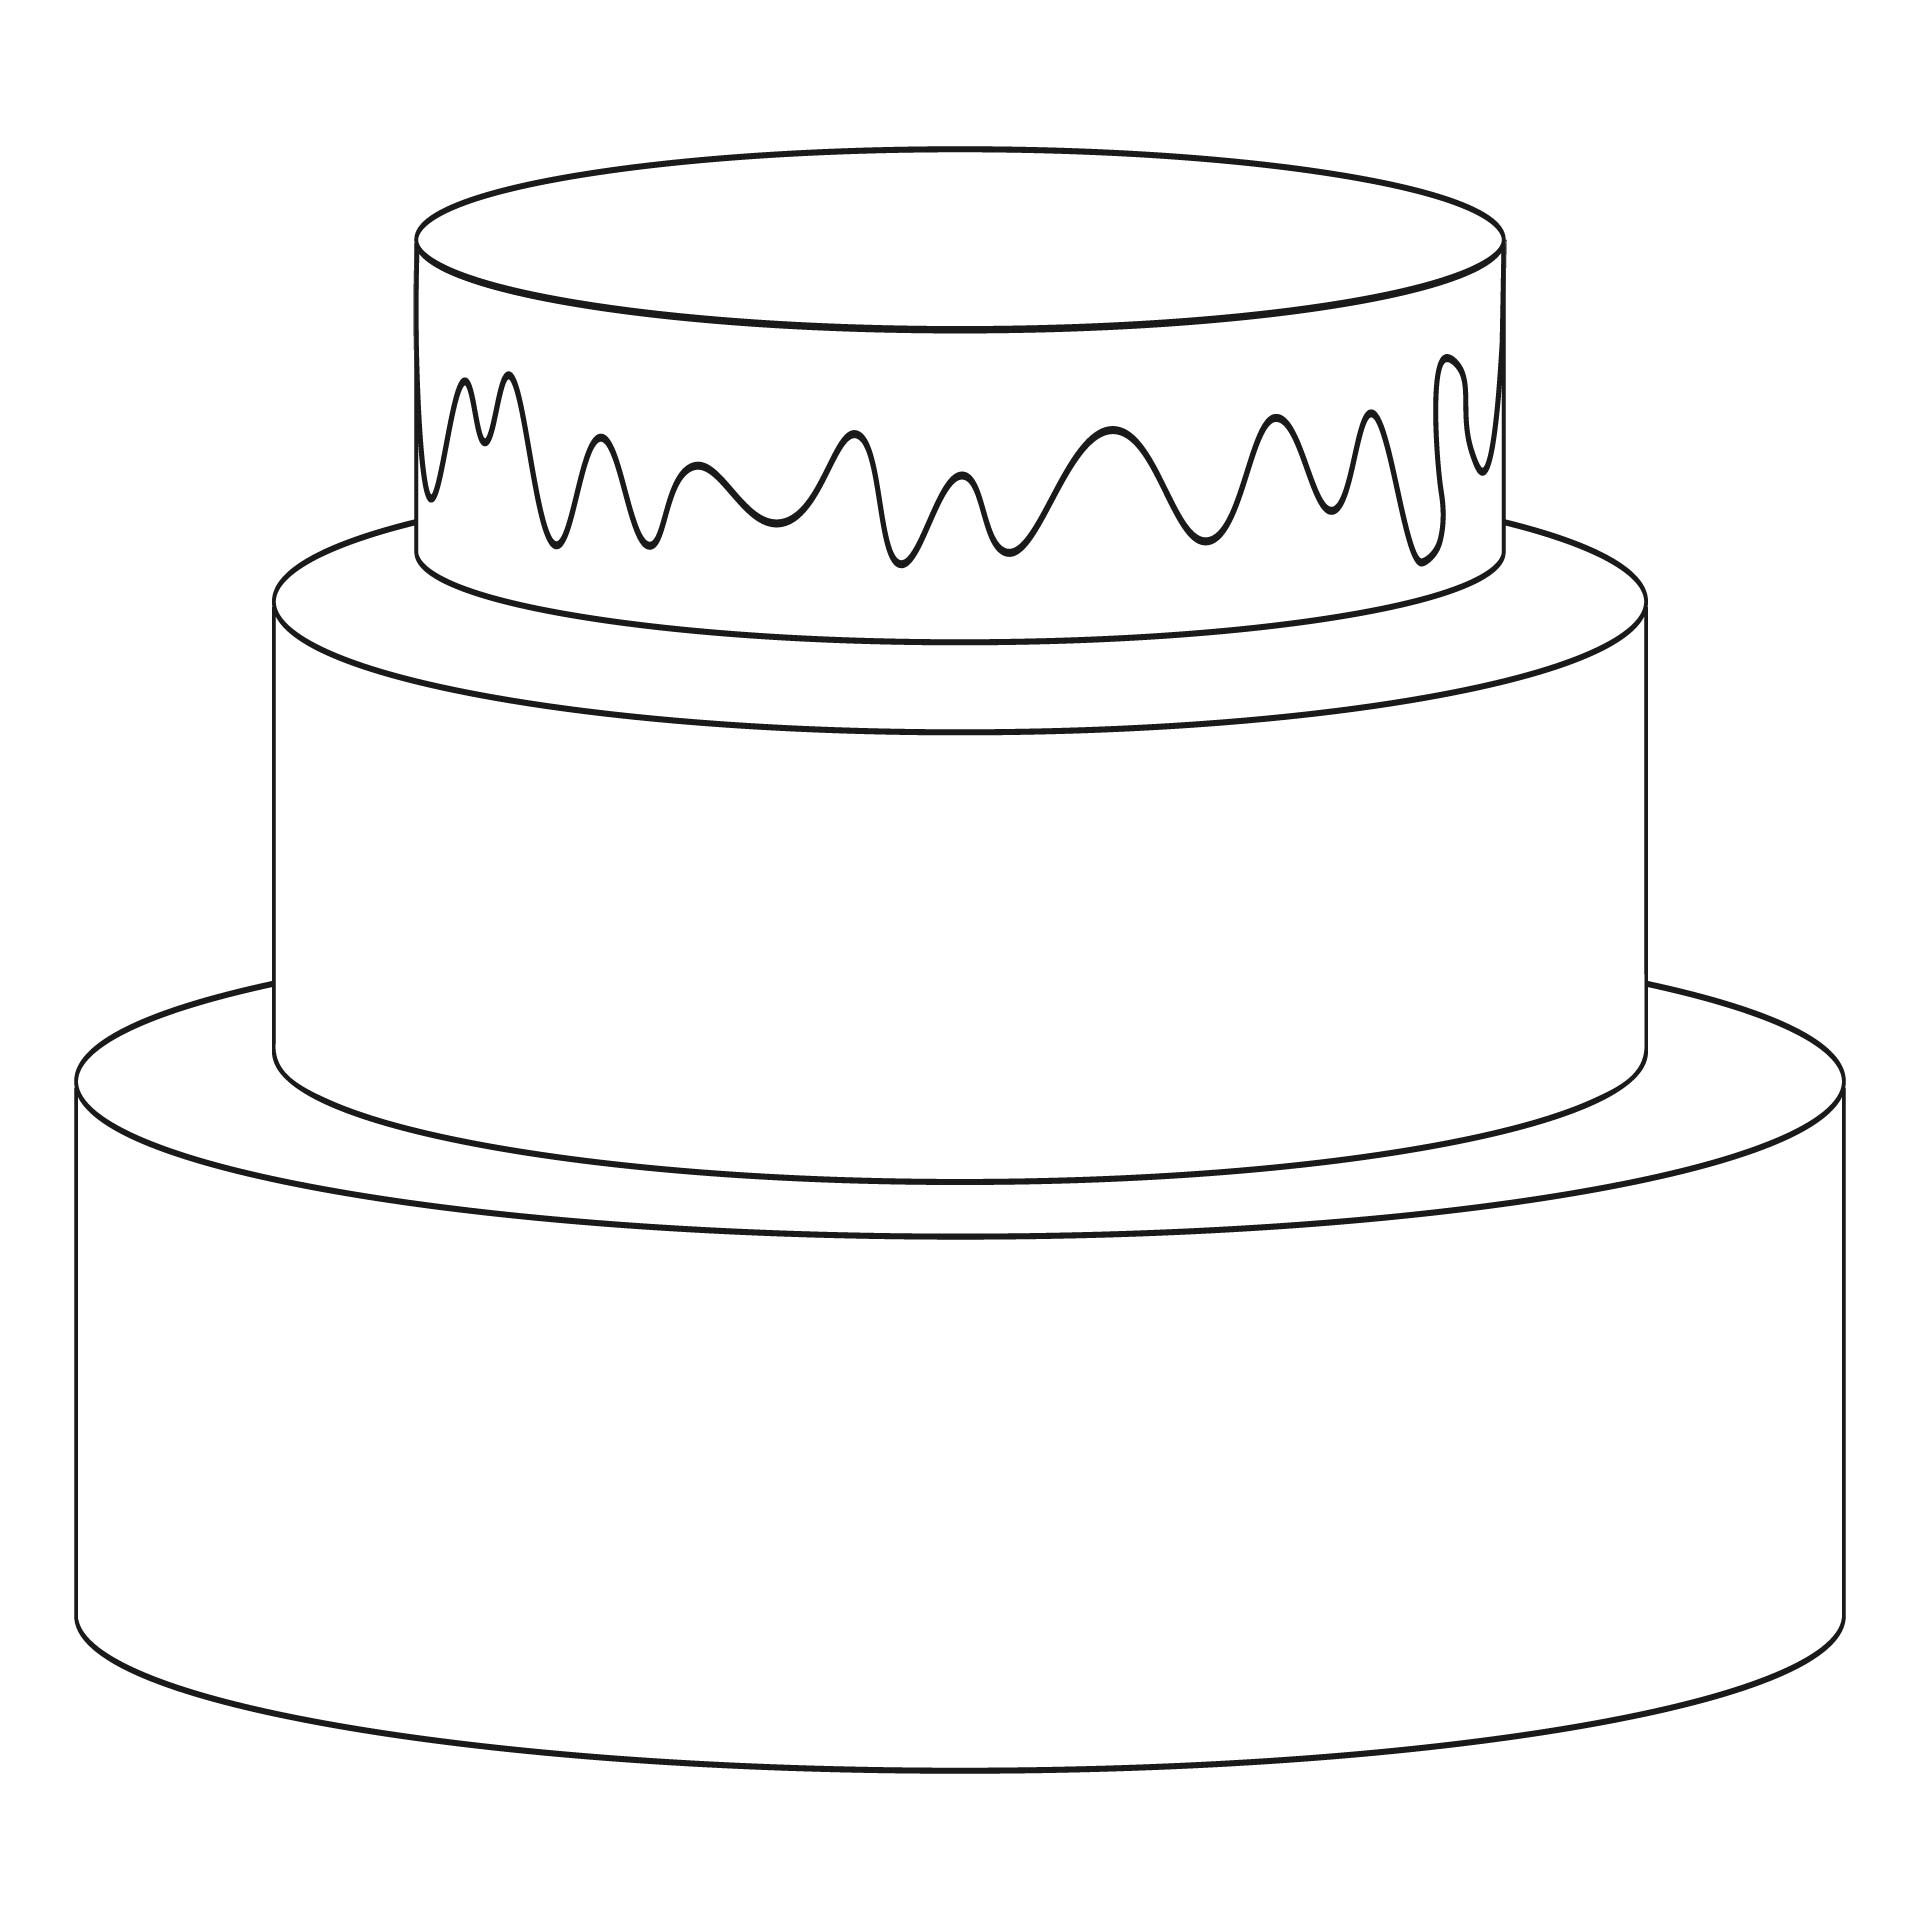 10-best-wedding-cake-template-printable-pdf-for-free-at-printablee